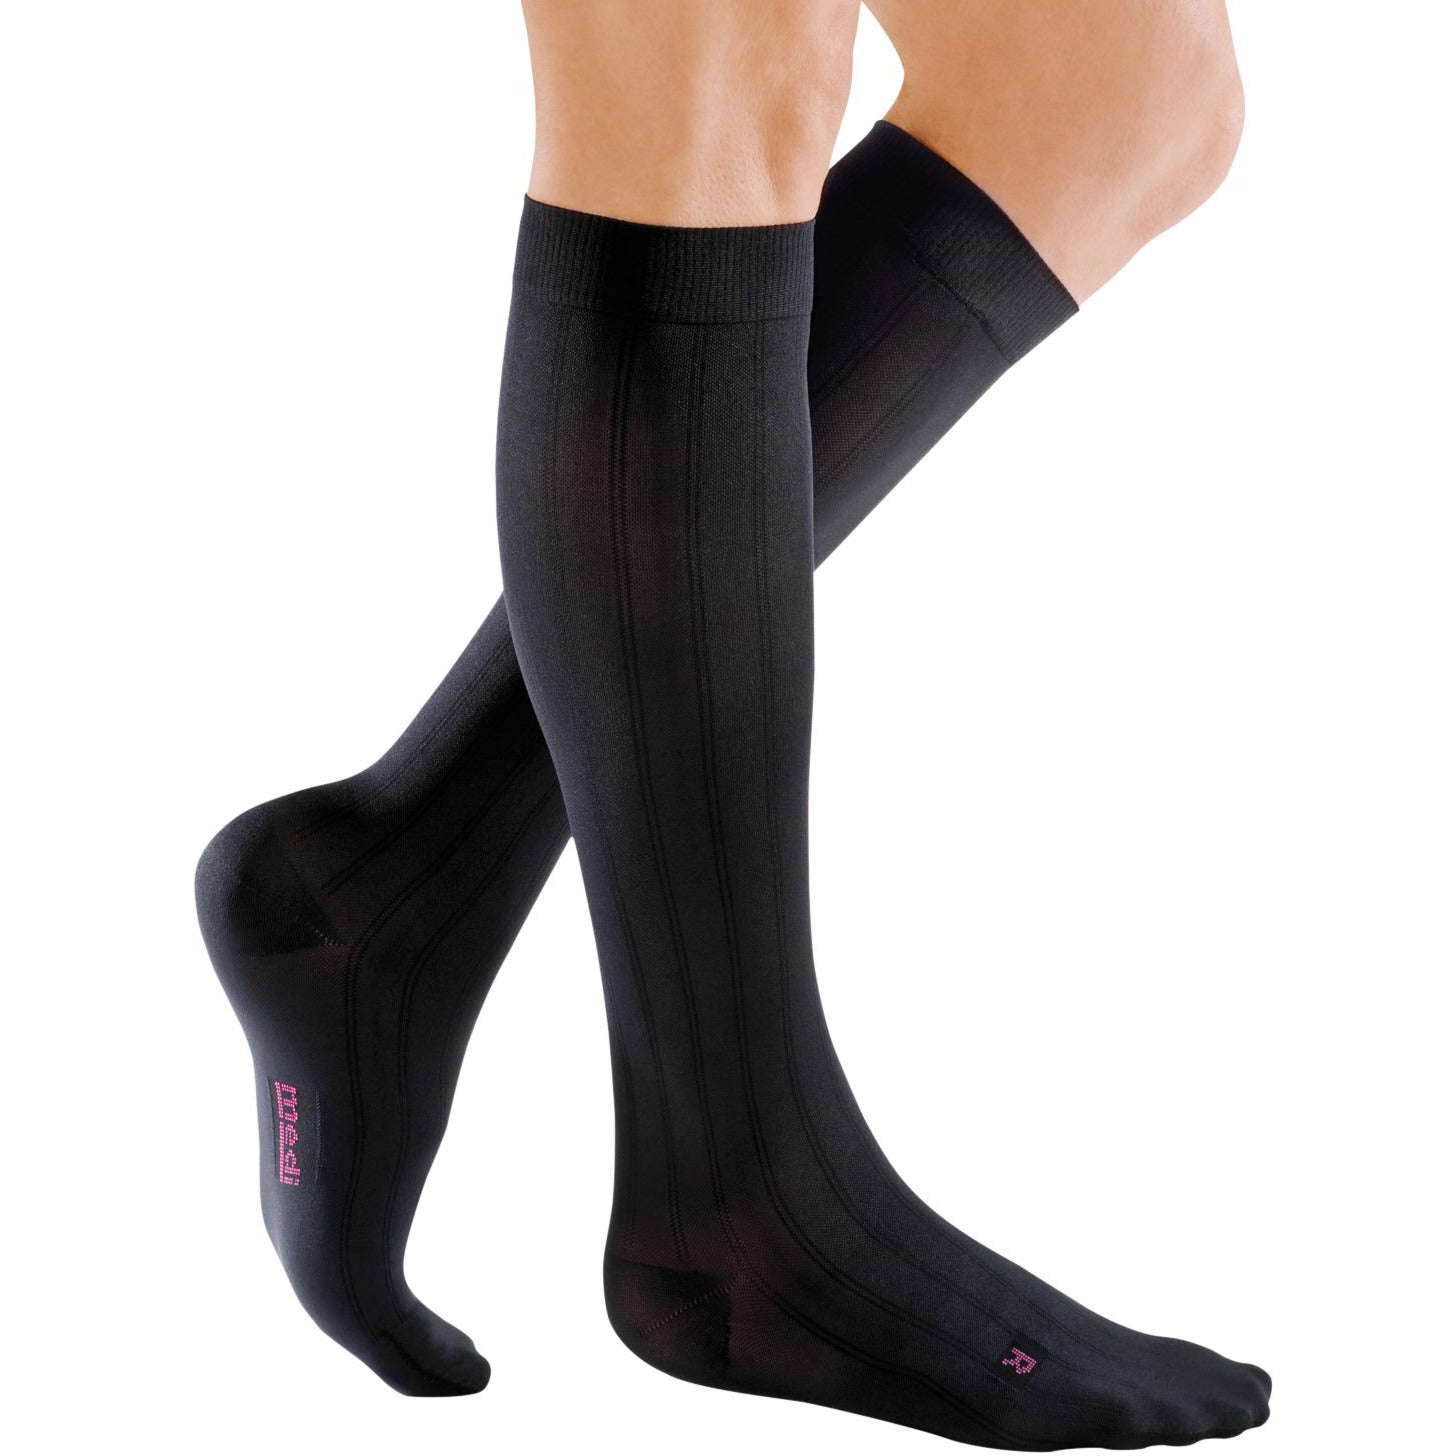 Mediven for Men Classic 15-20 mmHg Knee High, Extra Wide Calf, Black